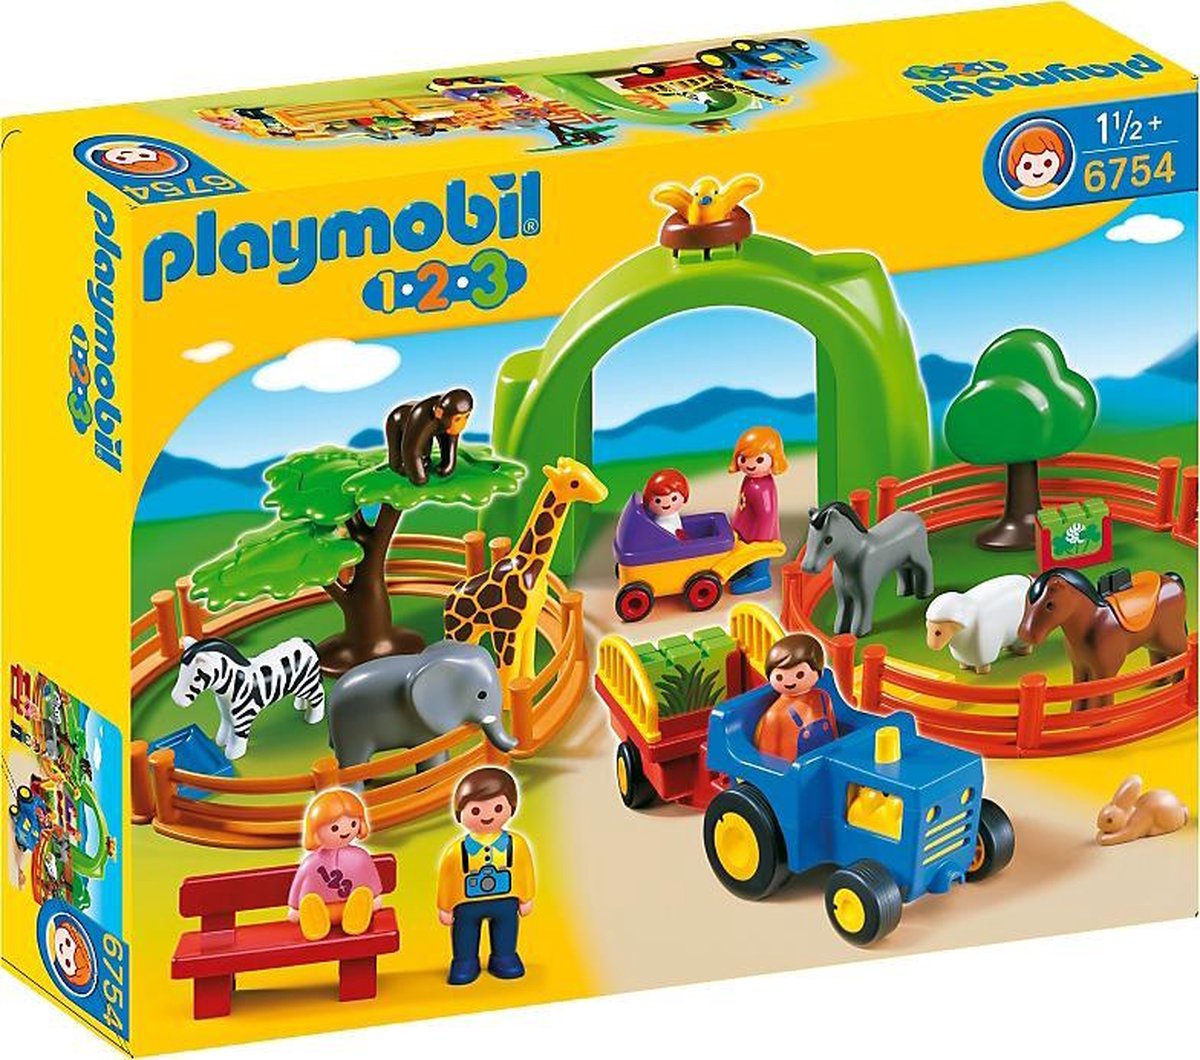 Playmobil 123 Grand Zoo - 6754 | bol.com